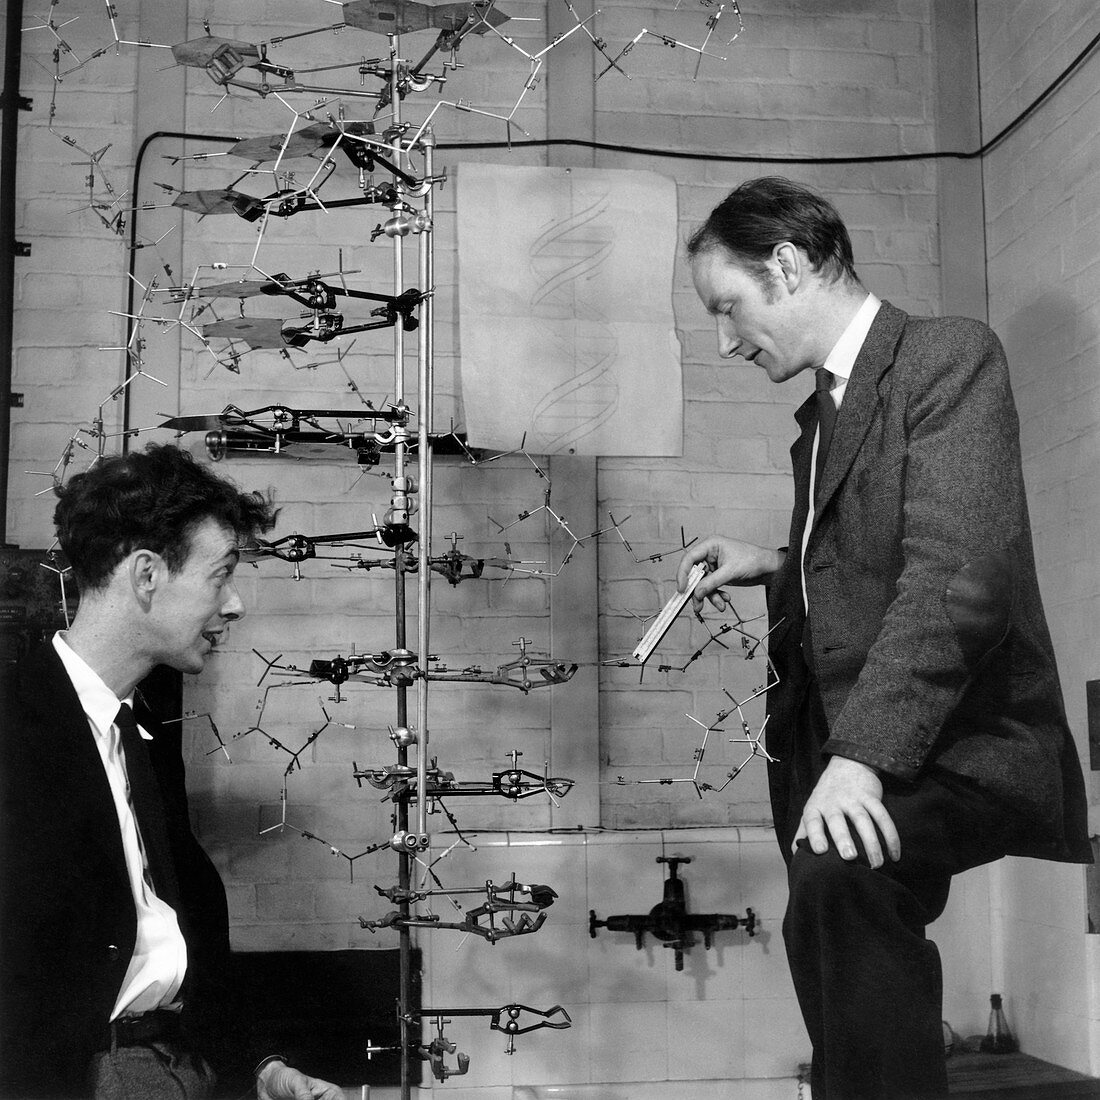 Watson and Crick